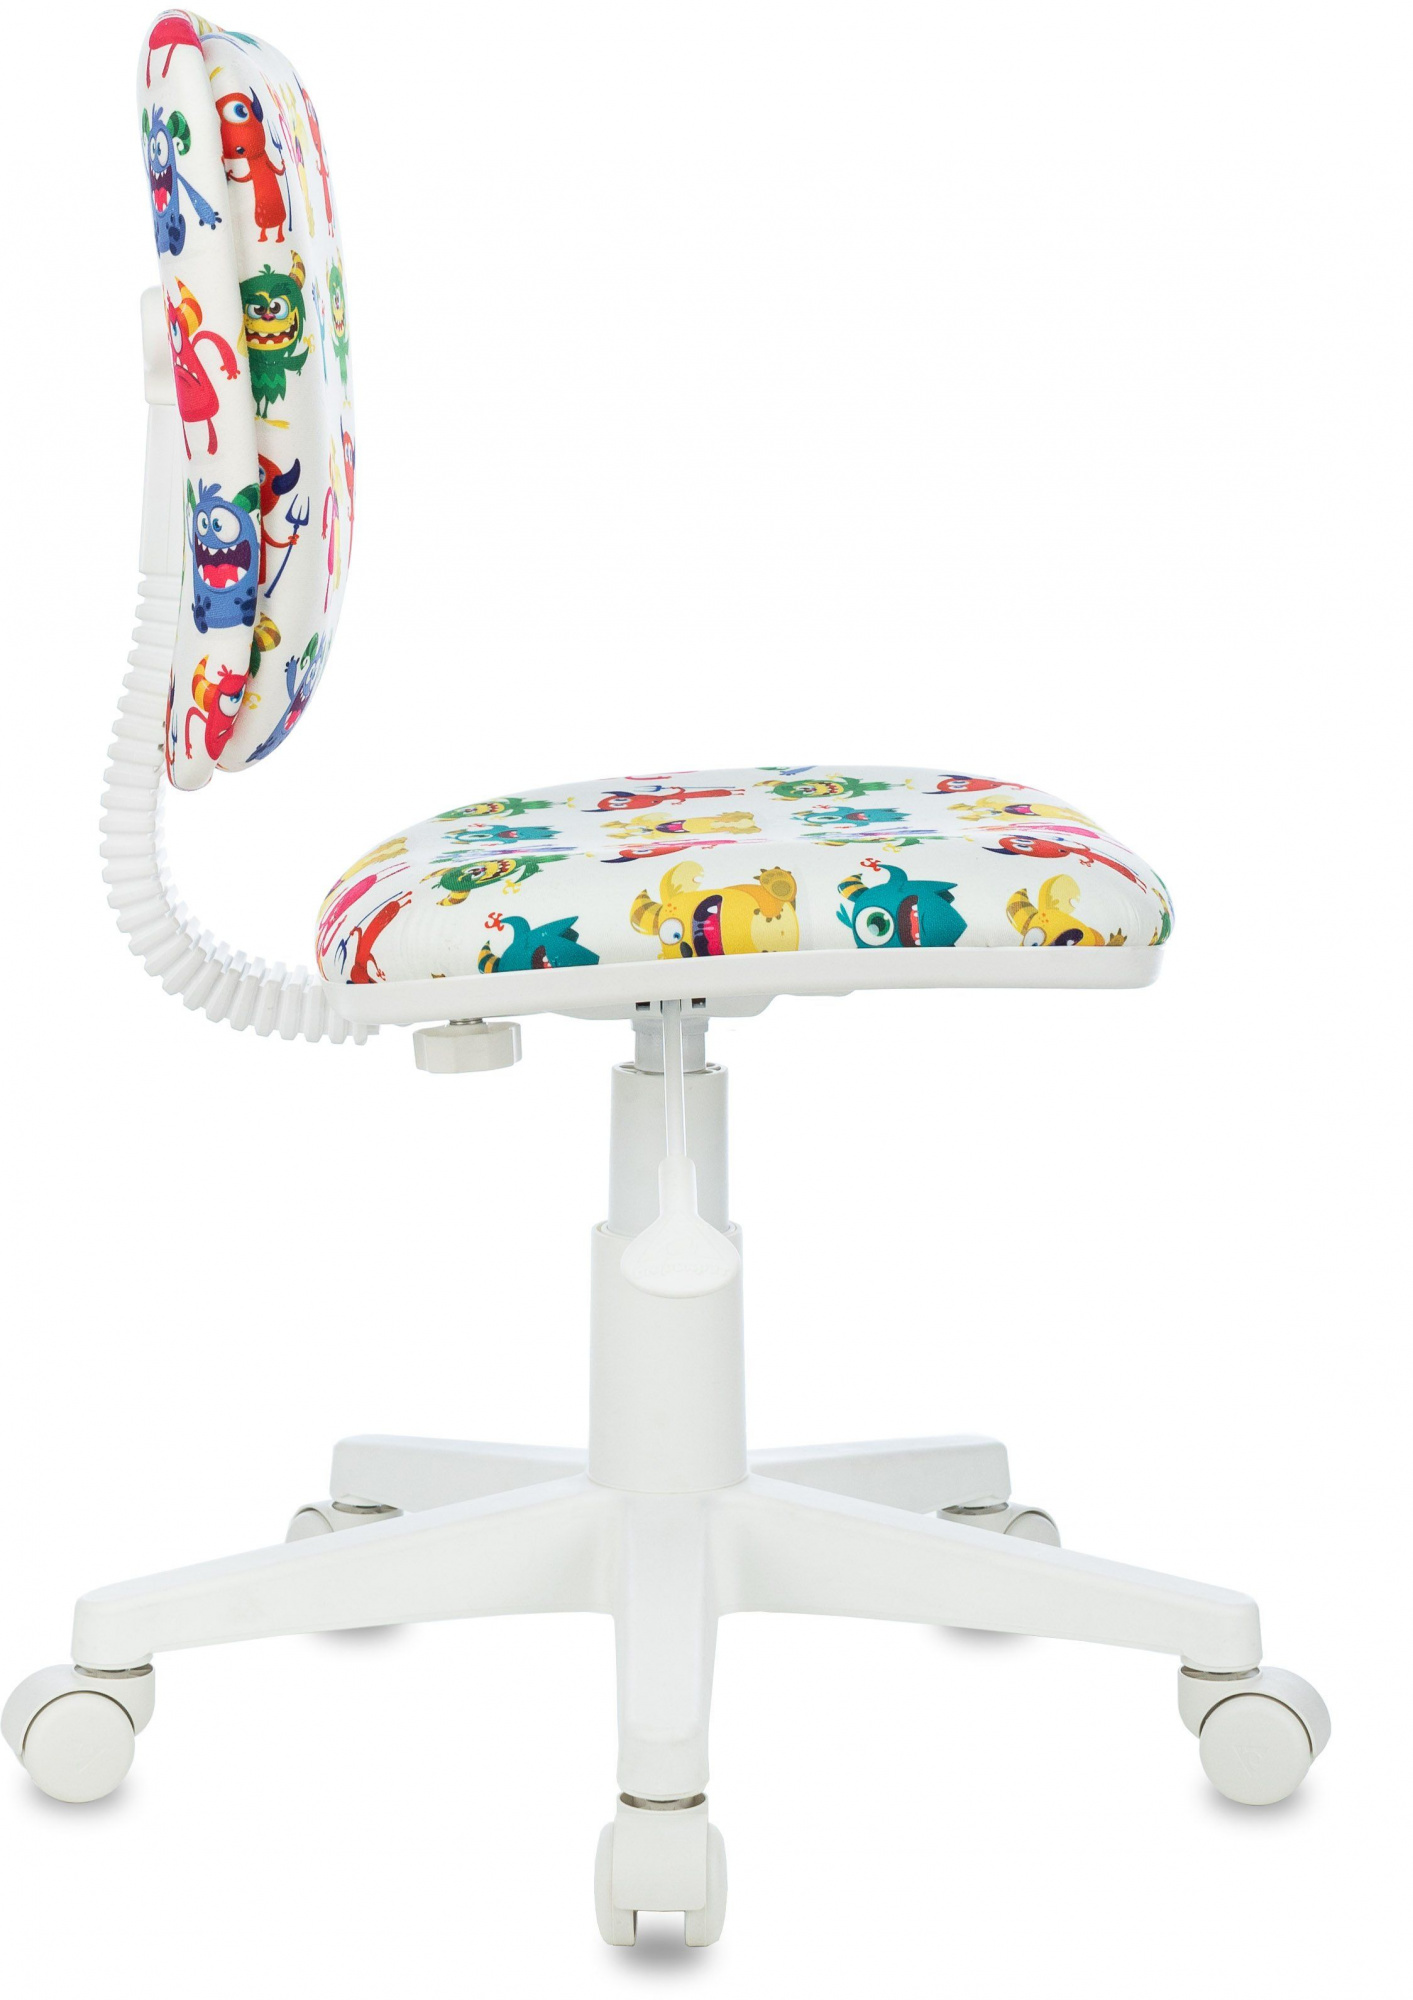 Кресло детское Бюрократ CH-W204NX, обивка: ткань, цвет: белый, рисунок монстры (CH-W204NX/MONSTER) от магазина Buro.store